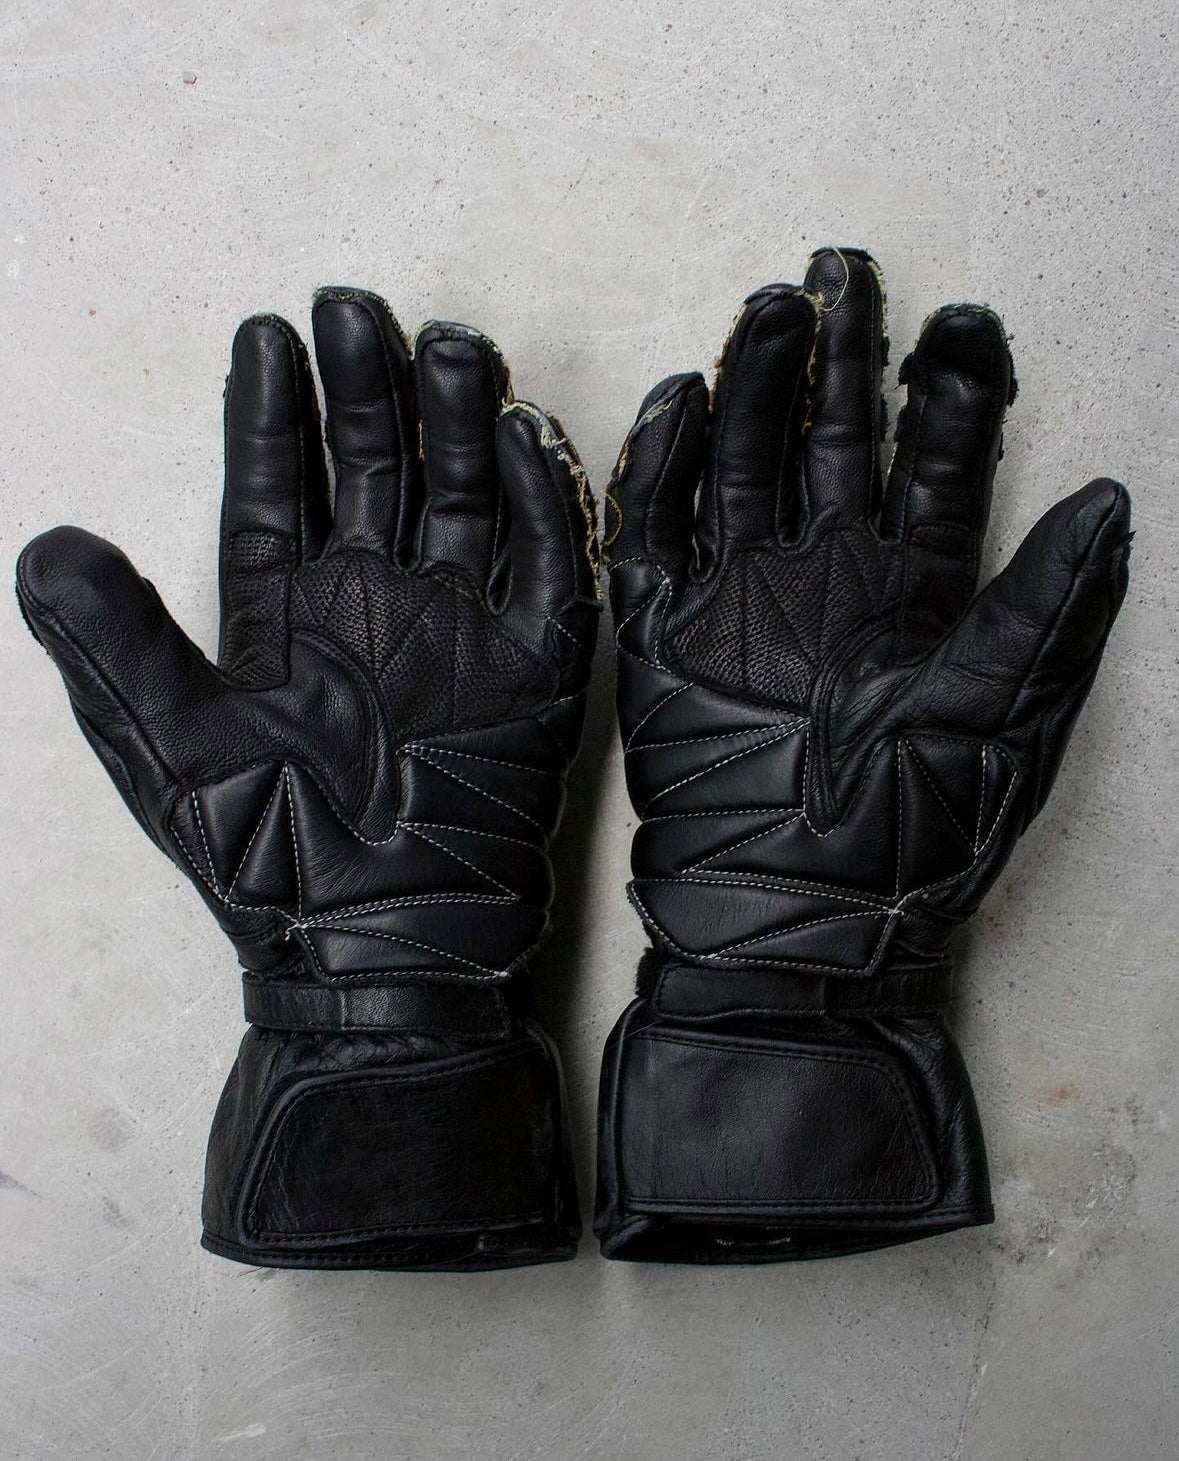 Kadoya x Kushitani “GPS GLOVE-K” Padded Lambskin Leather Motorcycle Gloves